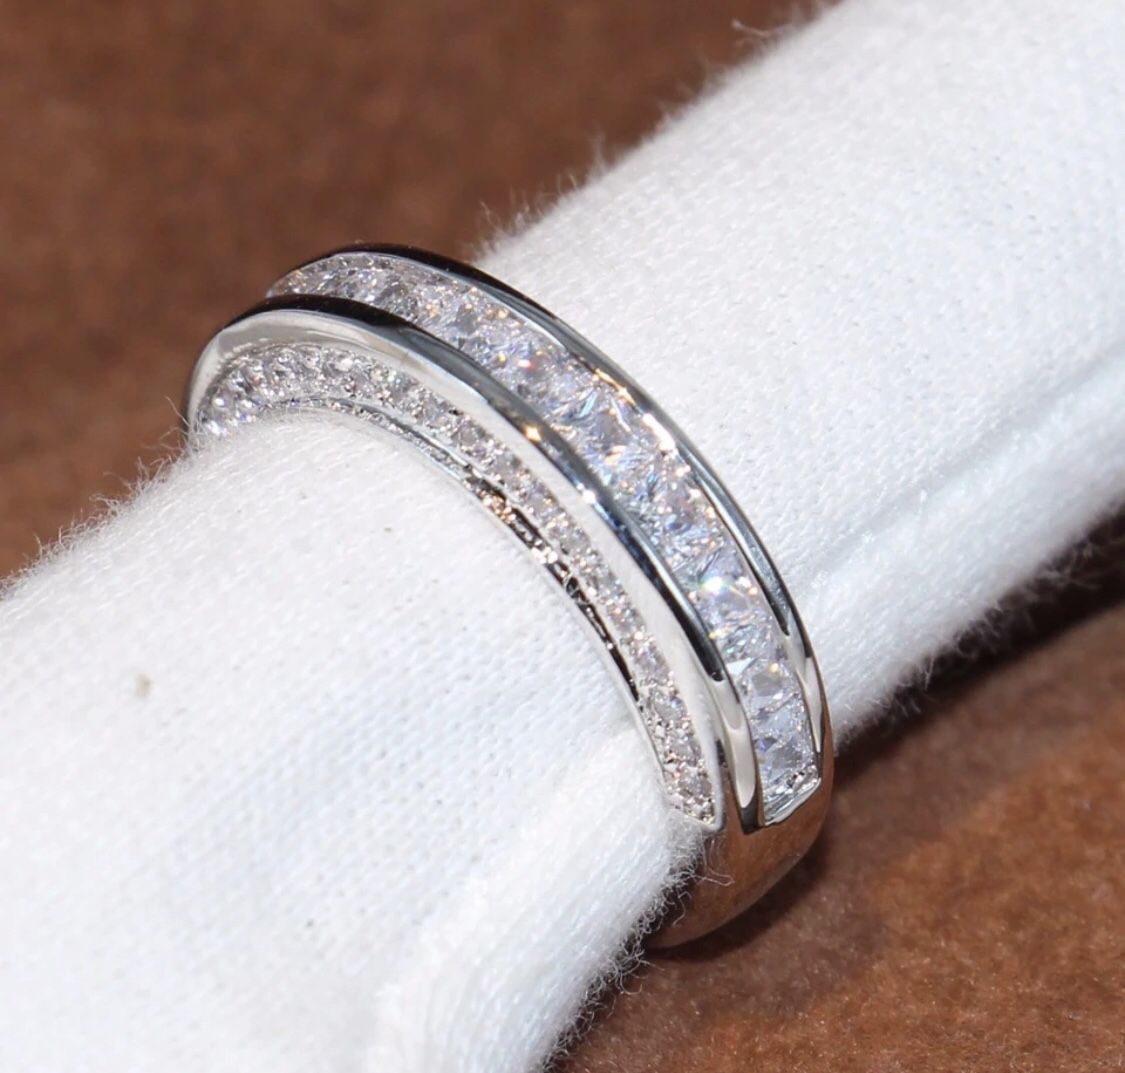 New 18 k white gold wedding ring set engagement ring